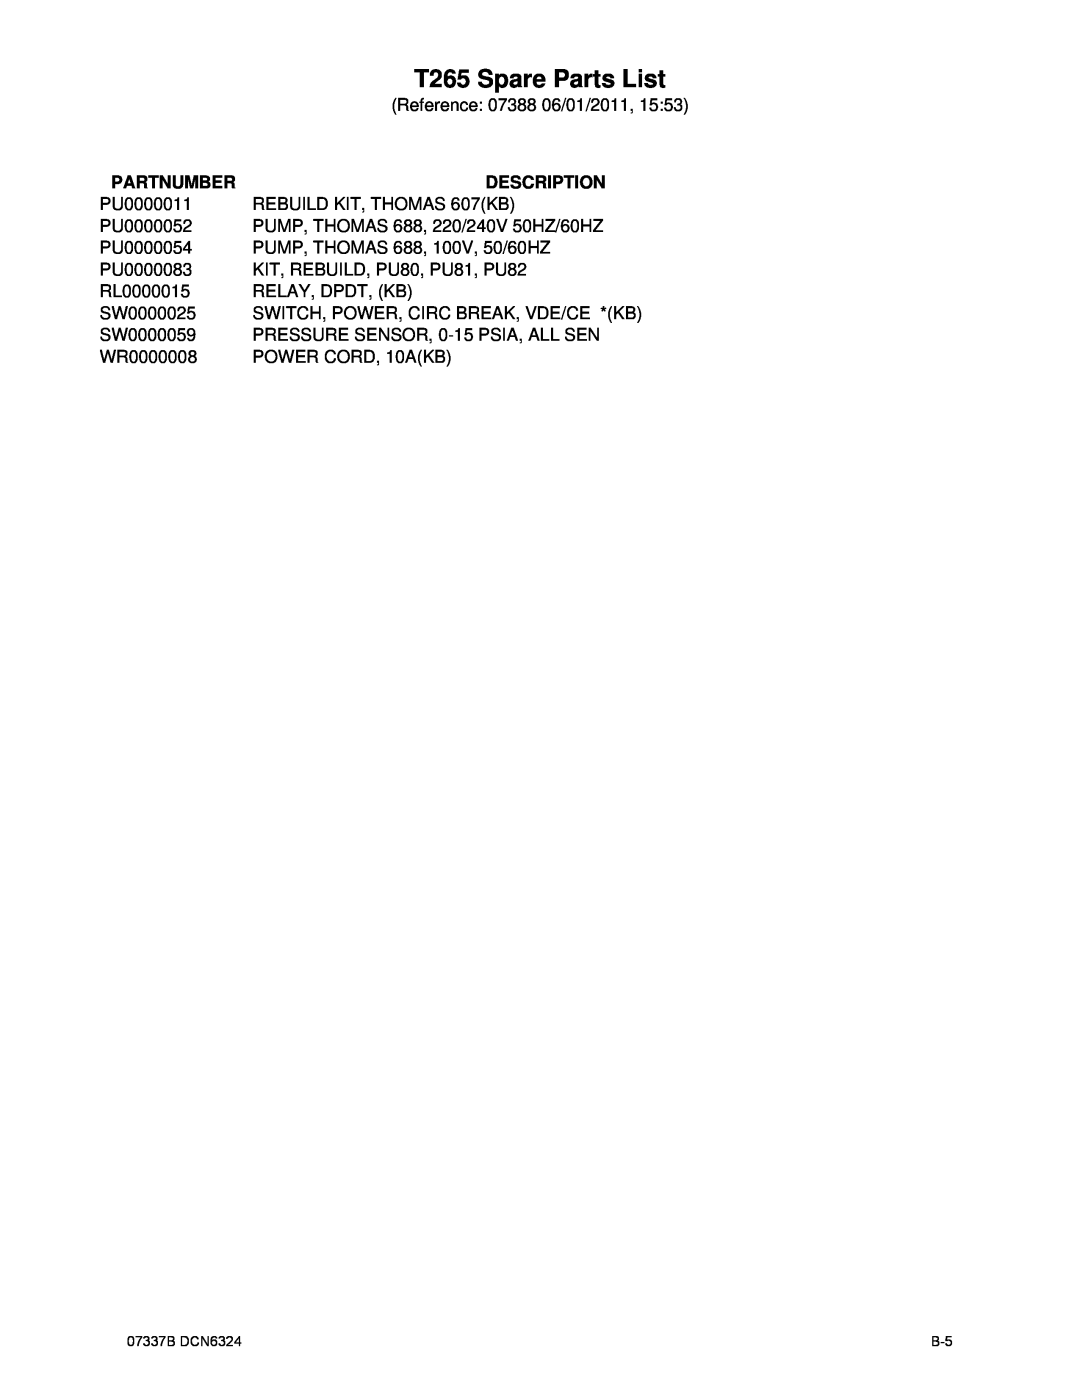 Teledyne manual T265 Spare Parts List, Reference 07388 06/01/2011, 15, Partnumber, Description 